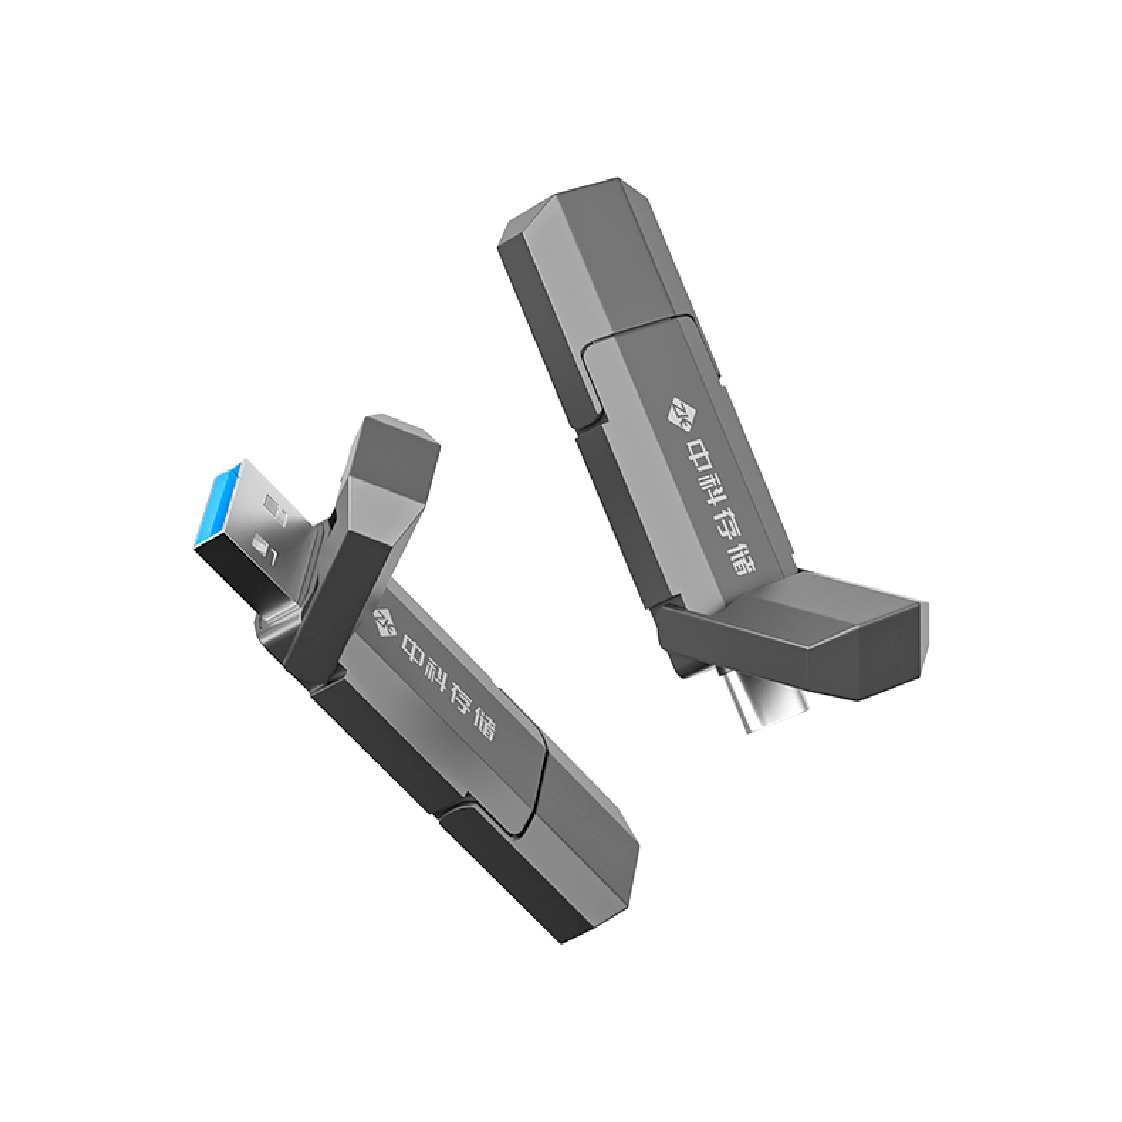 中科存 ZKUYV USB 3.2 U盘 银龙灰 512GB Type-C/USB-A双口 218.45元